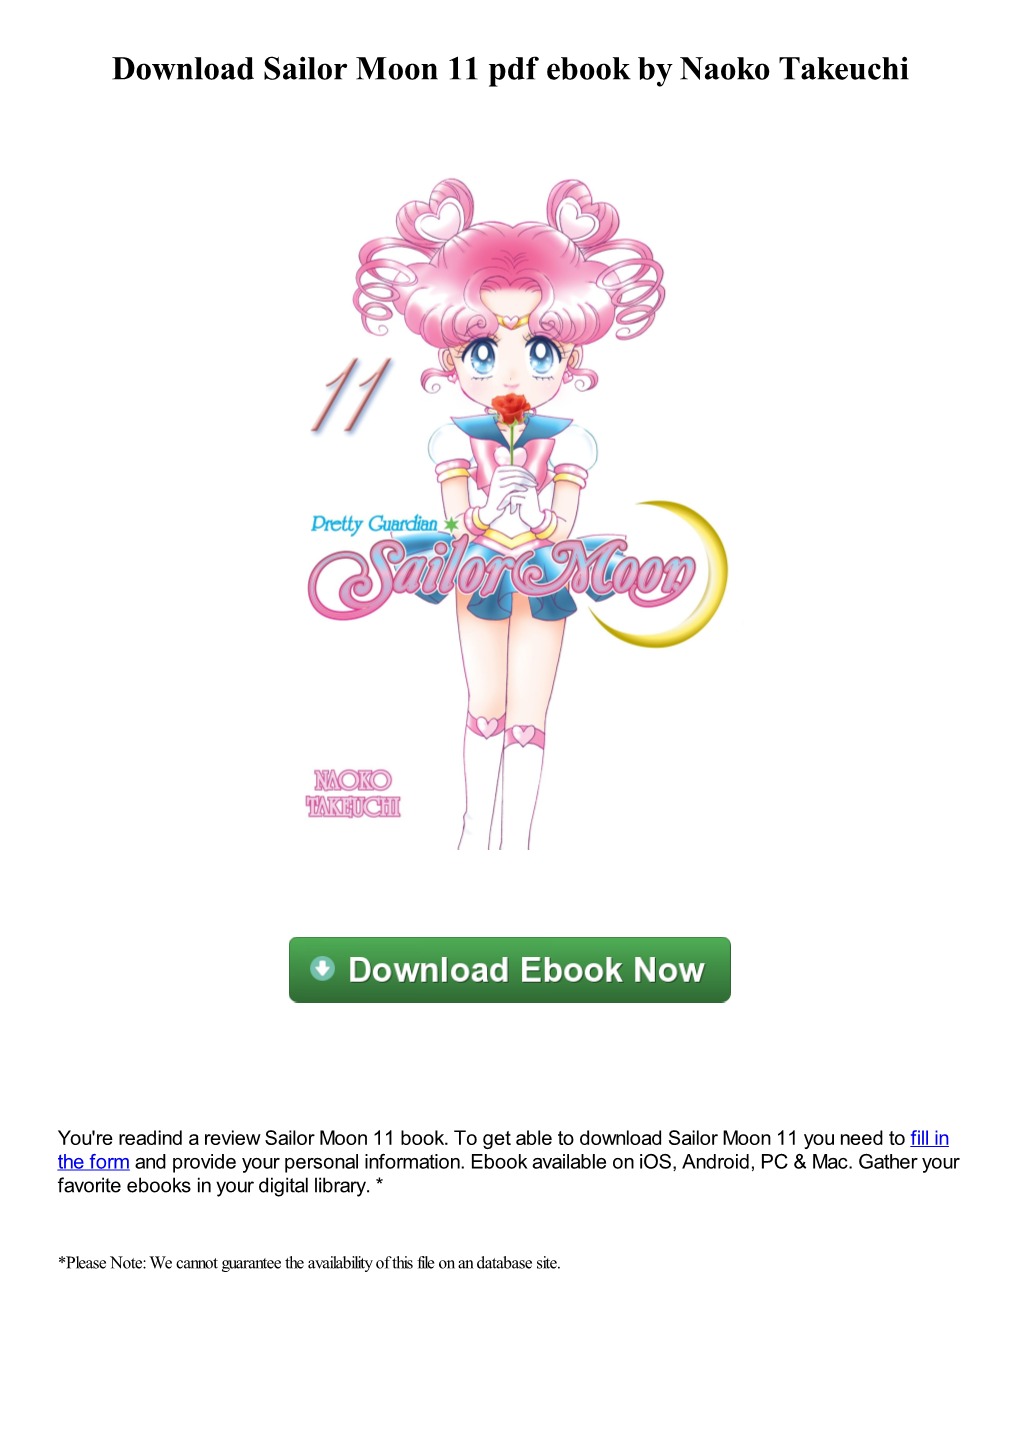 Sailor Moon 11 Pdf Ebook by Naoko Takeuchi